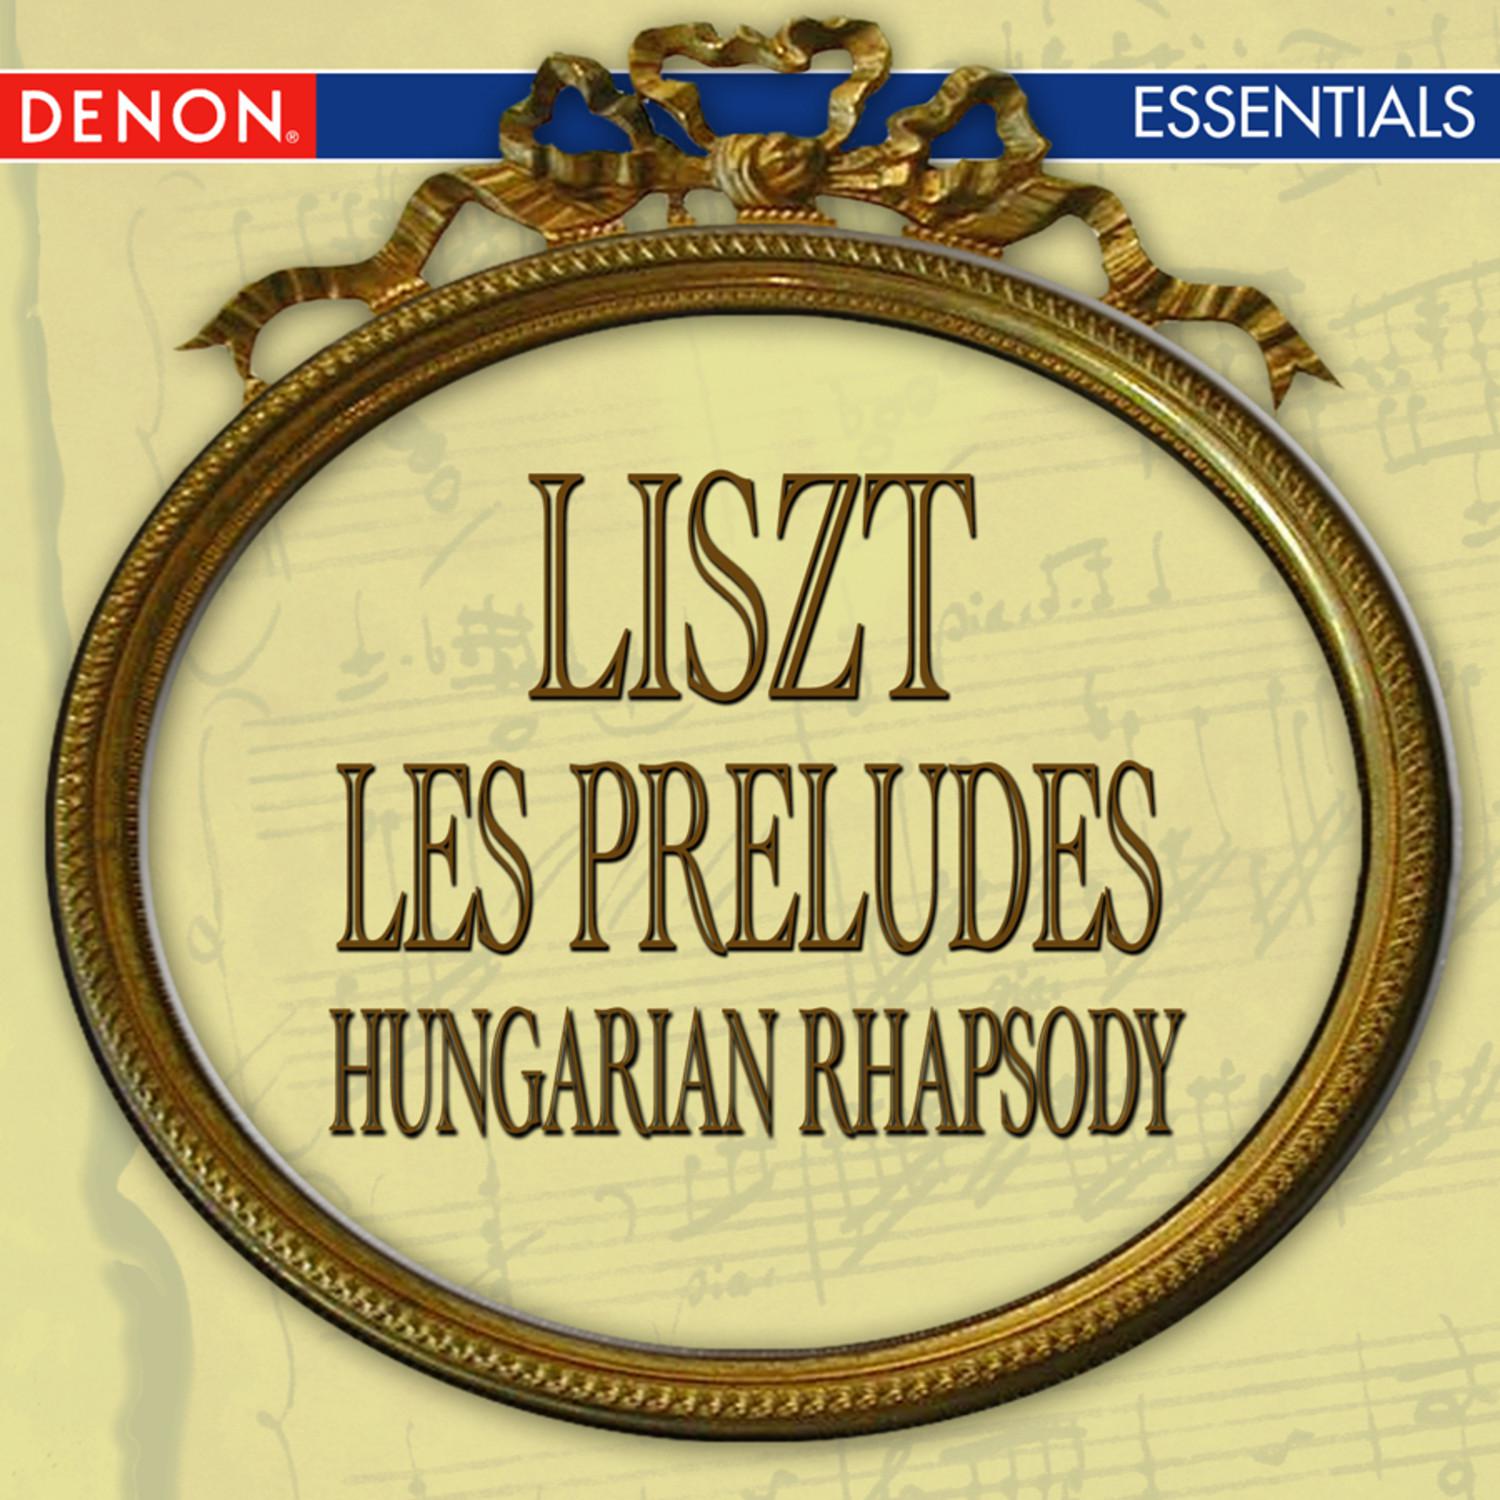 Liszt: Les Pre ludes  Hungarian Rhapsody